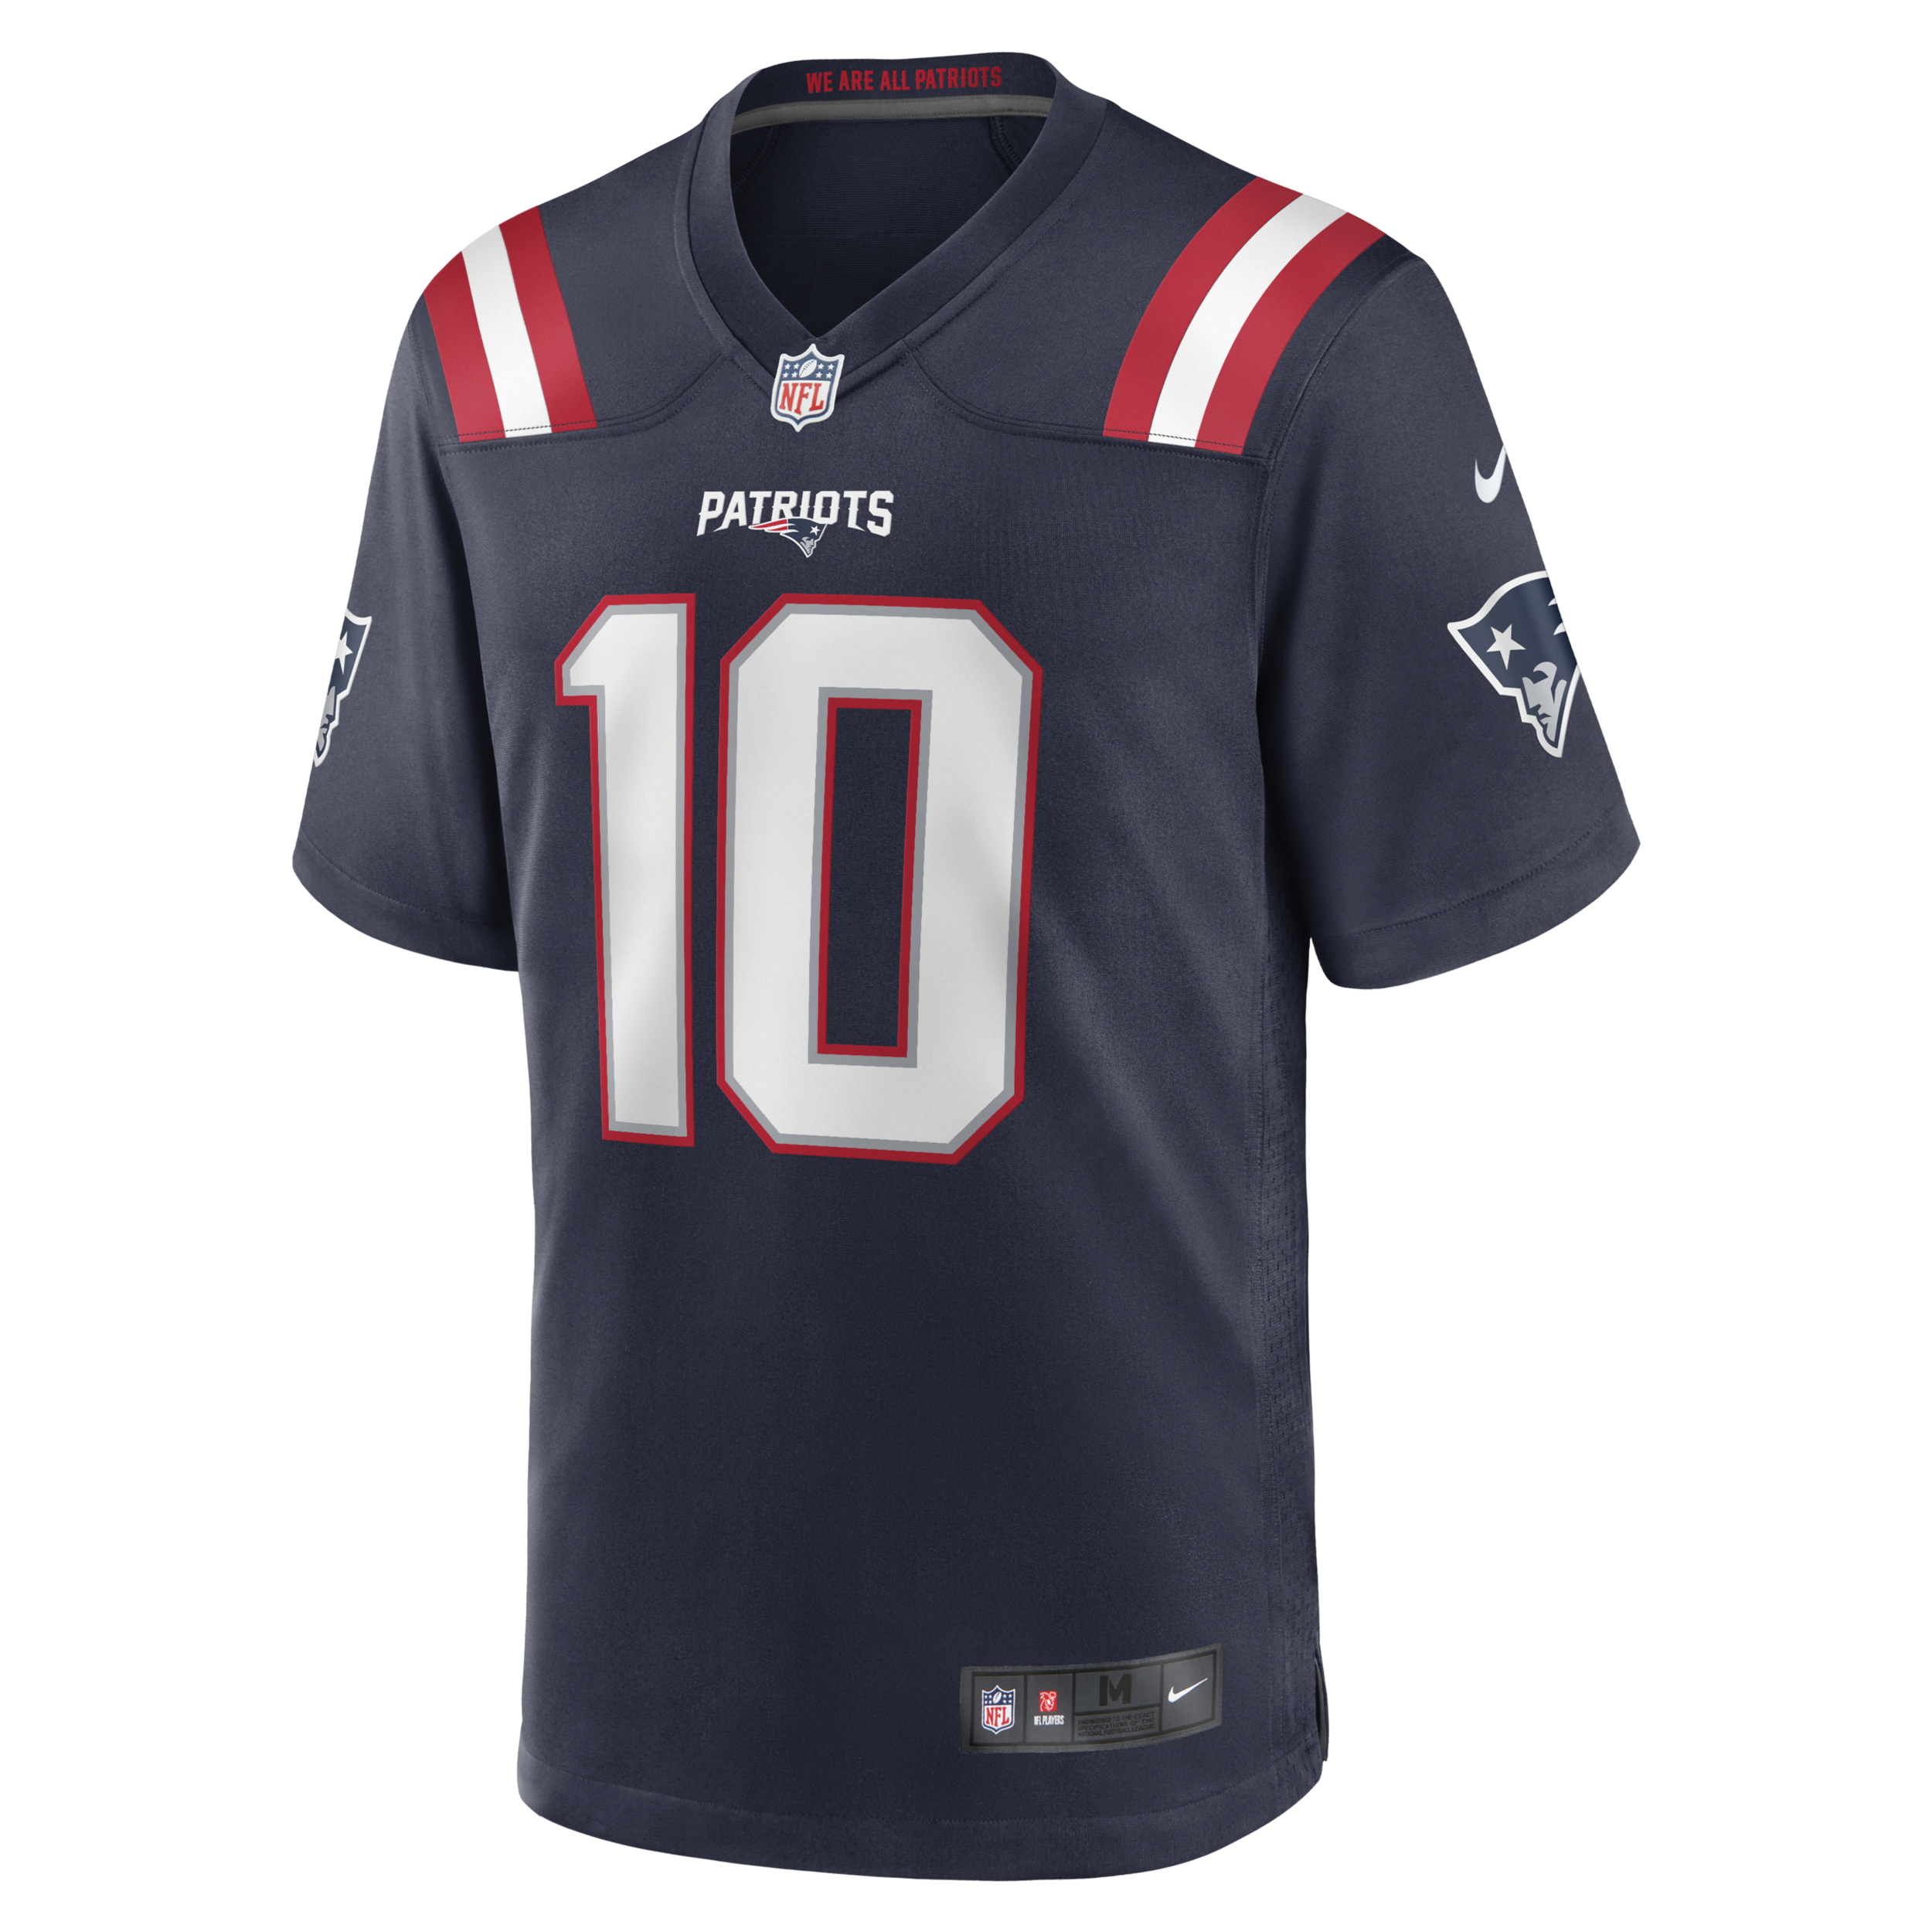 Nike Maglia da partita da football americano New England Patriots (Mac Jones) NFL – Uomo - Blu